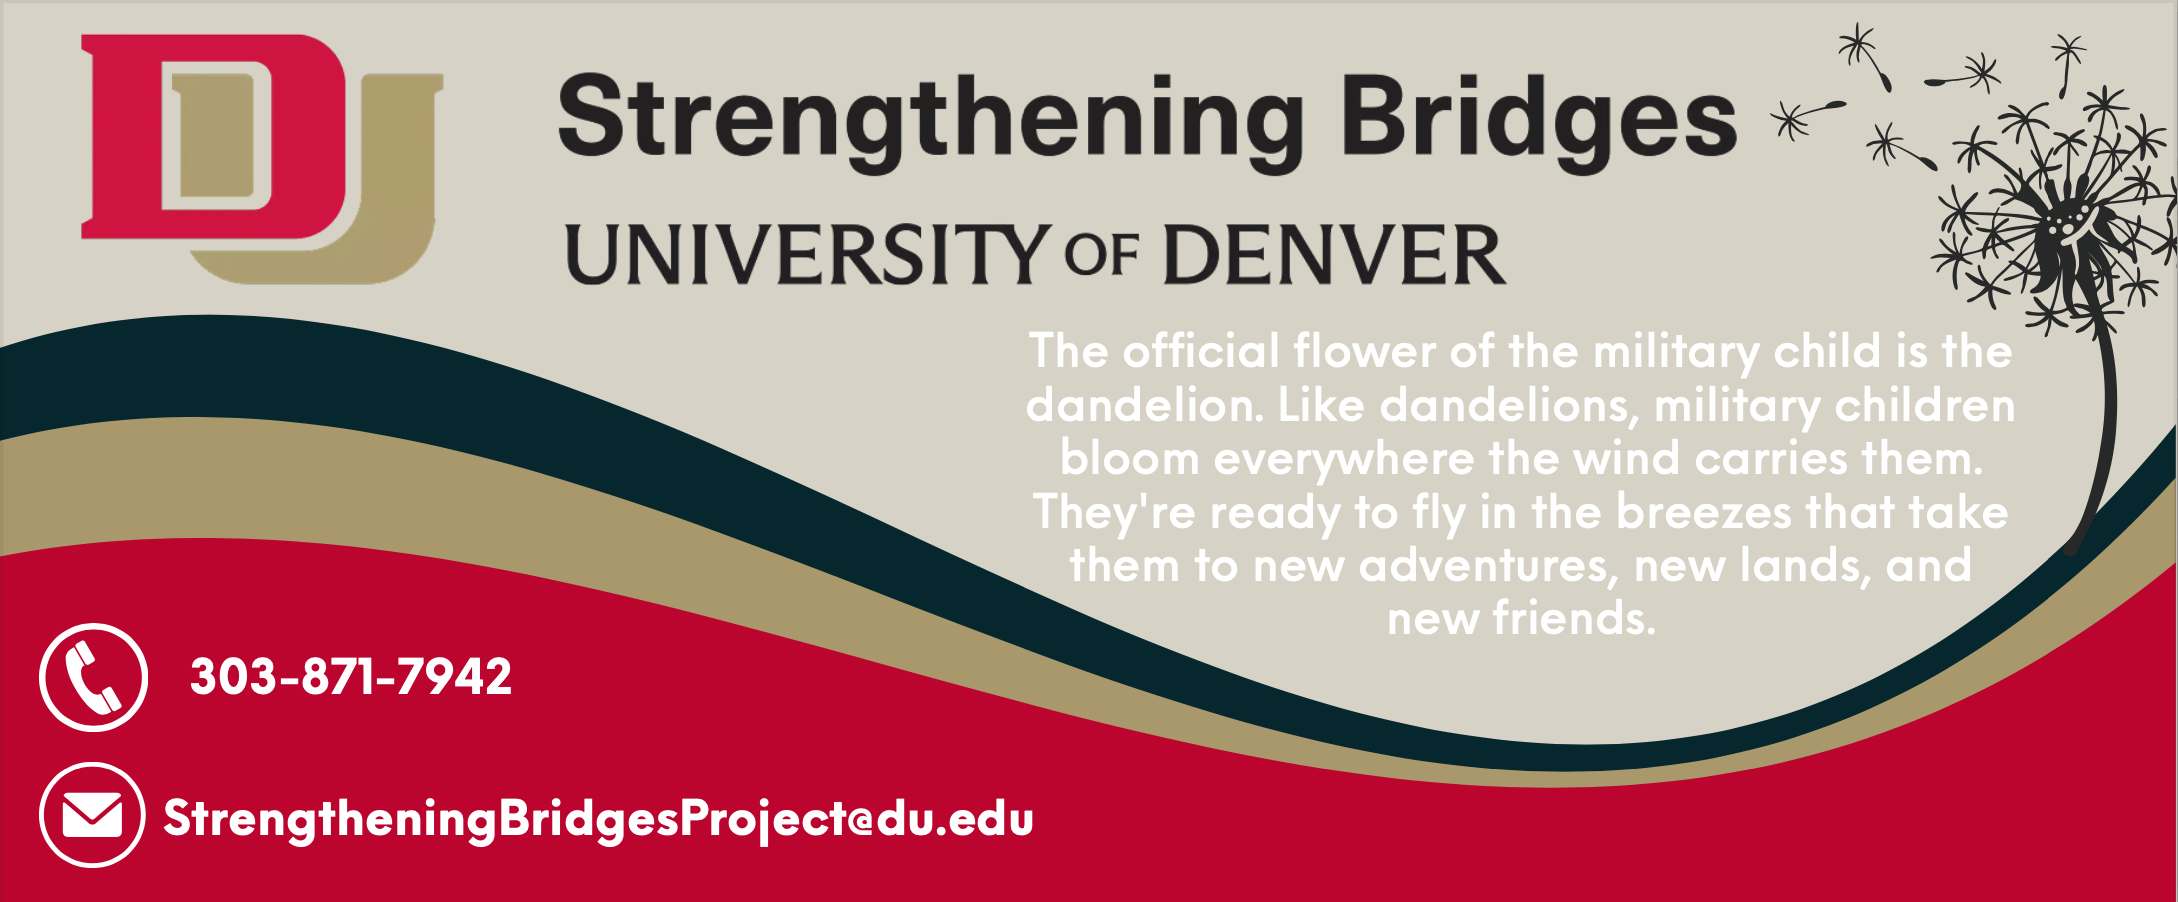 Strengthening Bridges Project, University of Denver